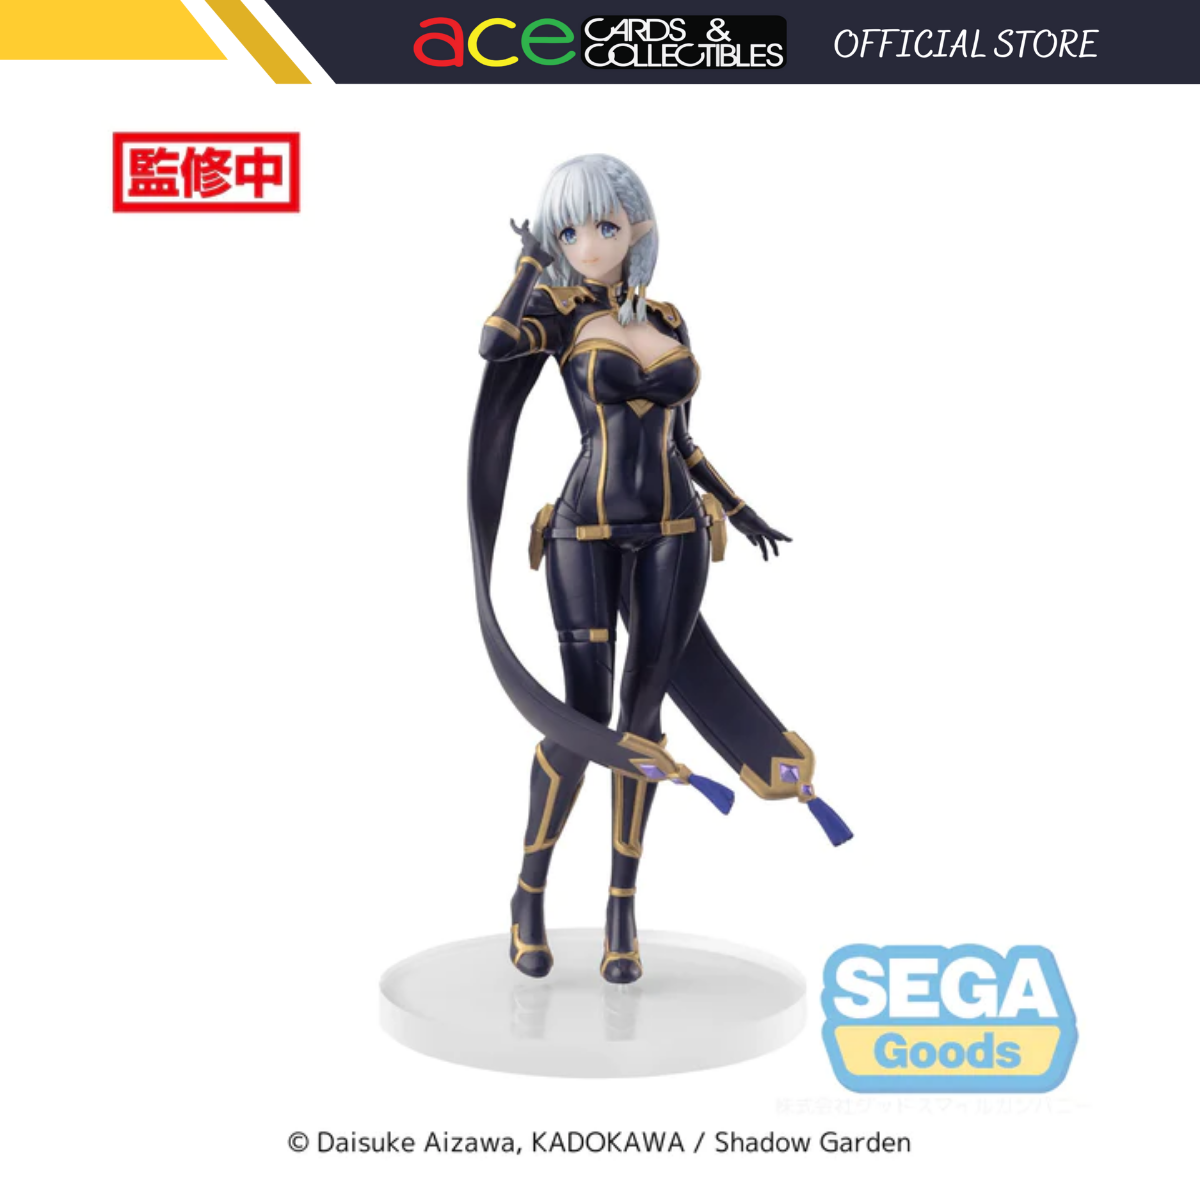 The Eminence In Shadow Luminasta PVC Figure "Beta"-Sega-Ace Cards & Collectibles